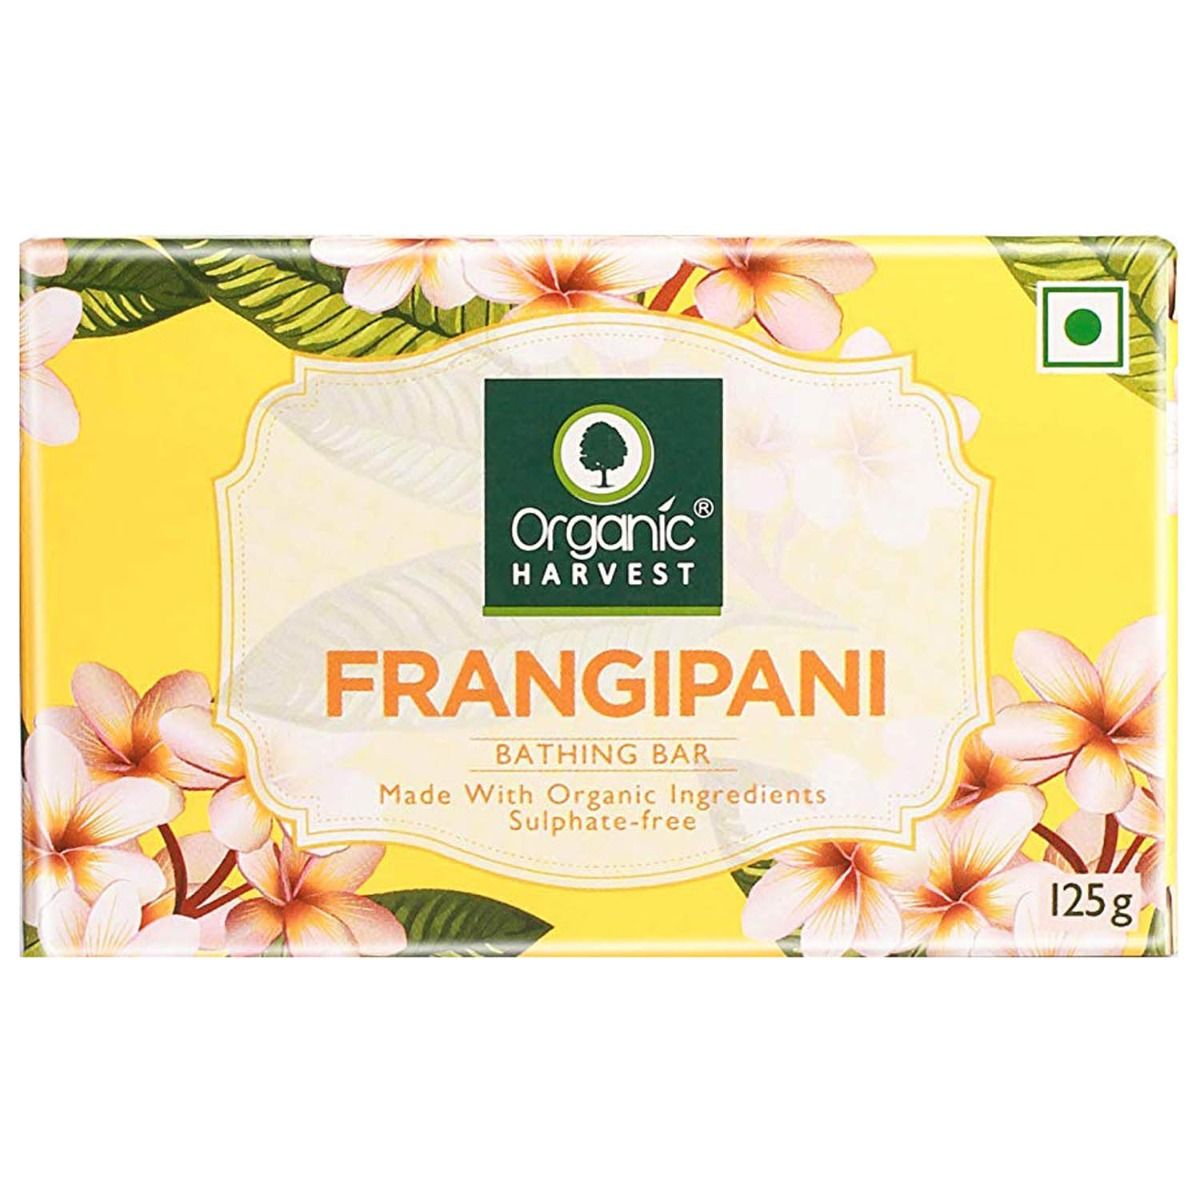 Organic Harvest Frangipani Bathing Bar, 125 gm, Pack of 1 